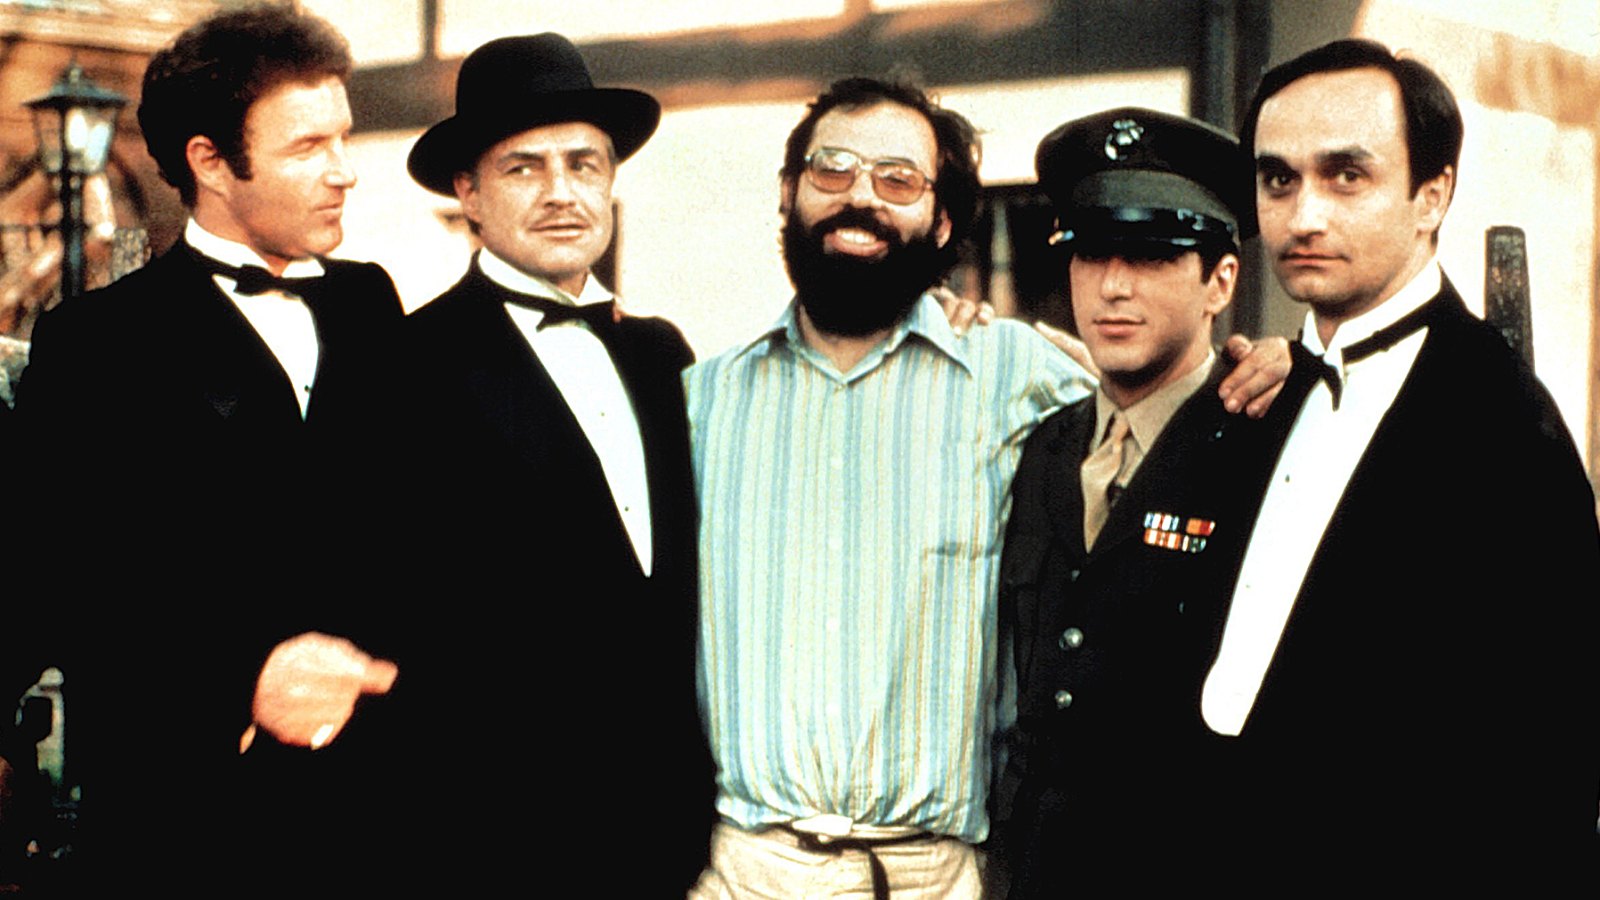 The Godfather's James Caan, Marlon Brando, Francis Ford Coppola, Al Pacino, and John Cazale, 1972